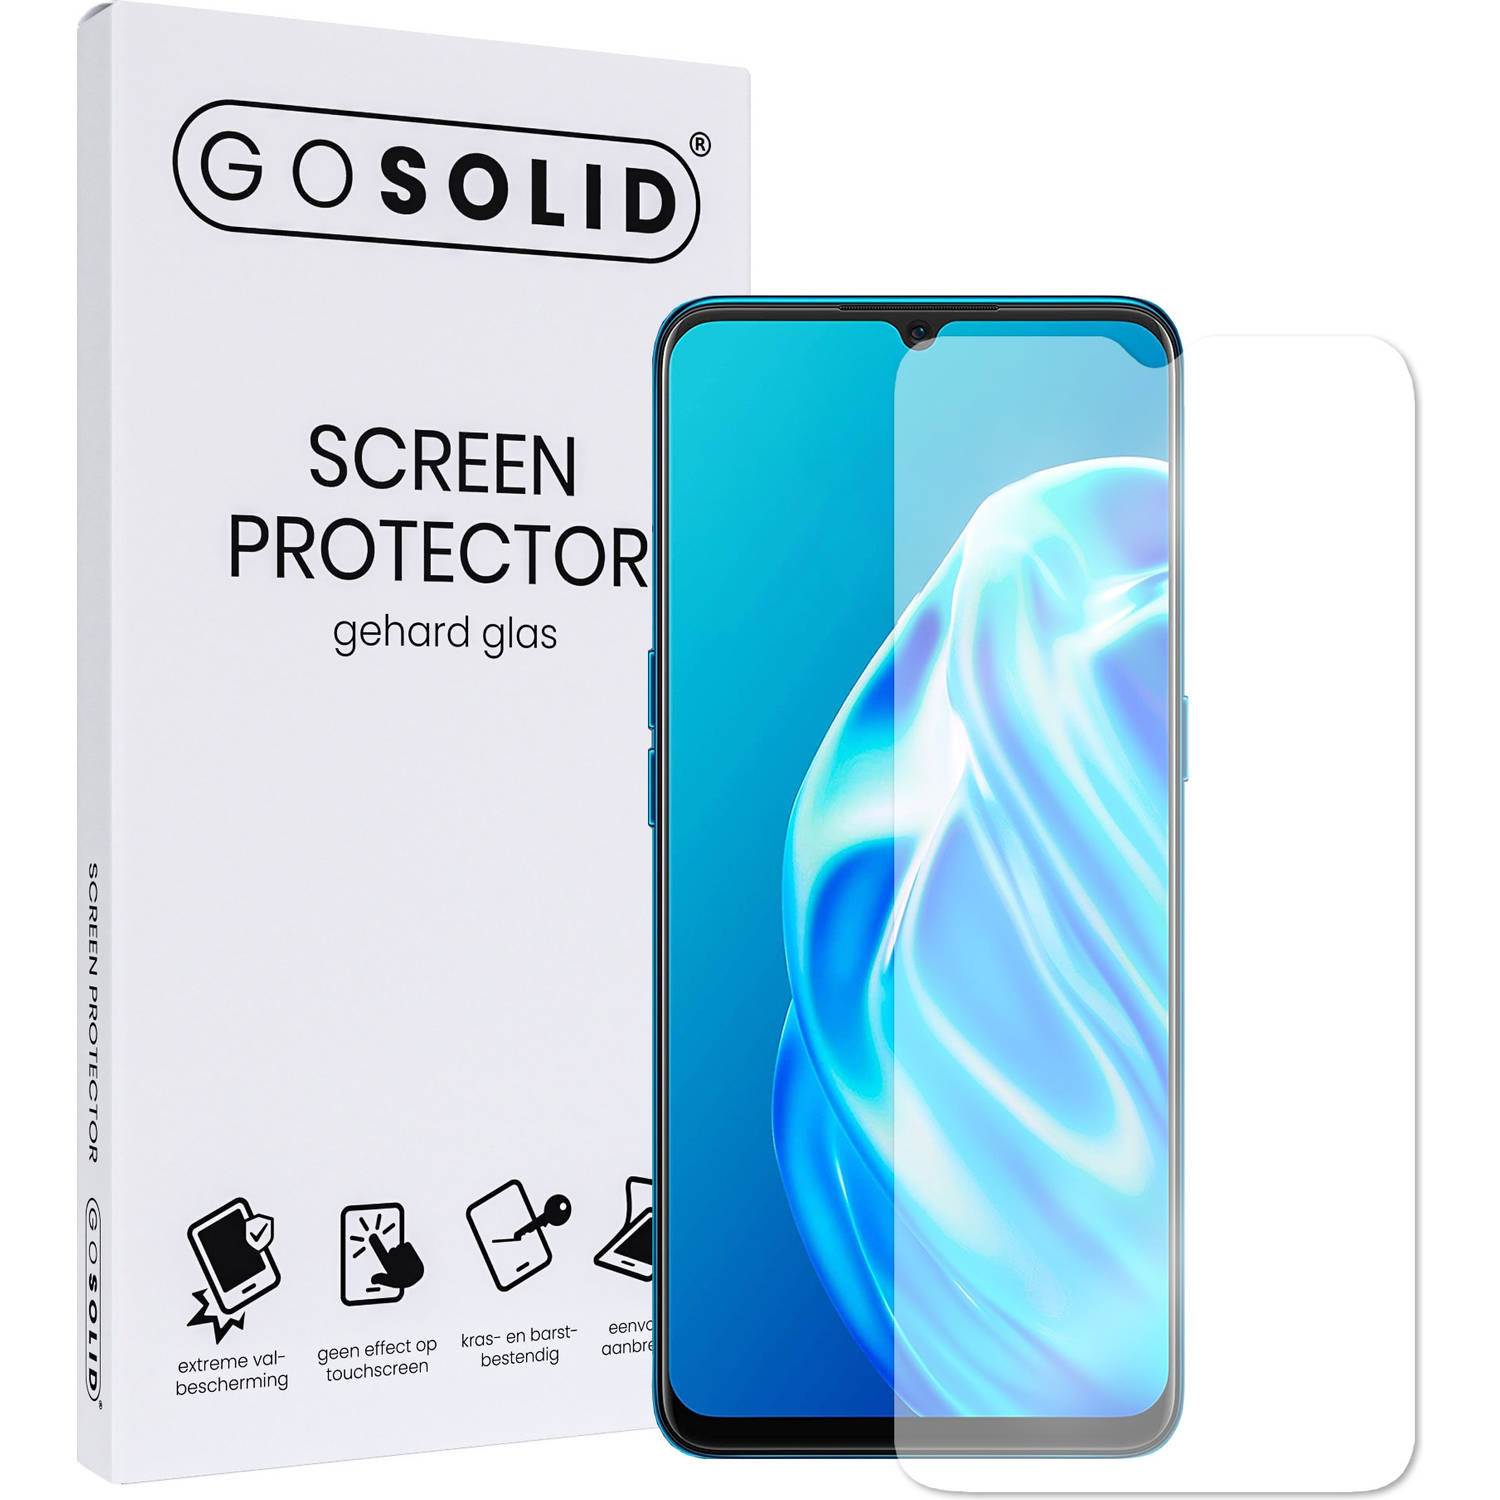 GO SOLID! ® Screenprotector voor Oppo A91